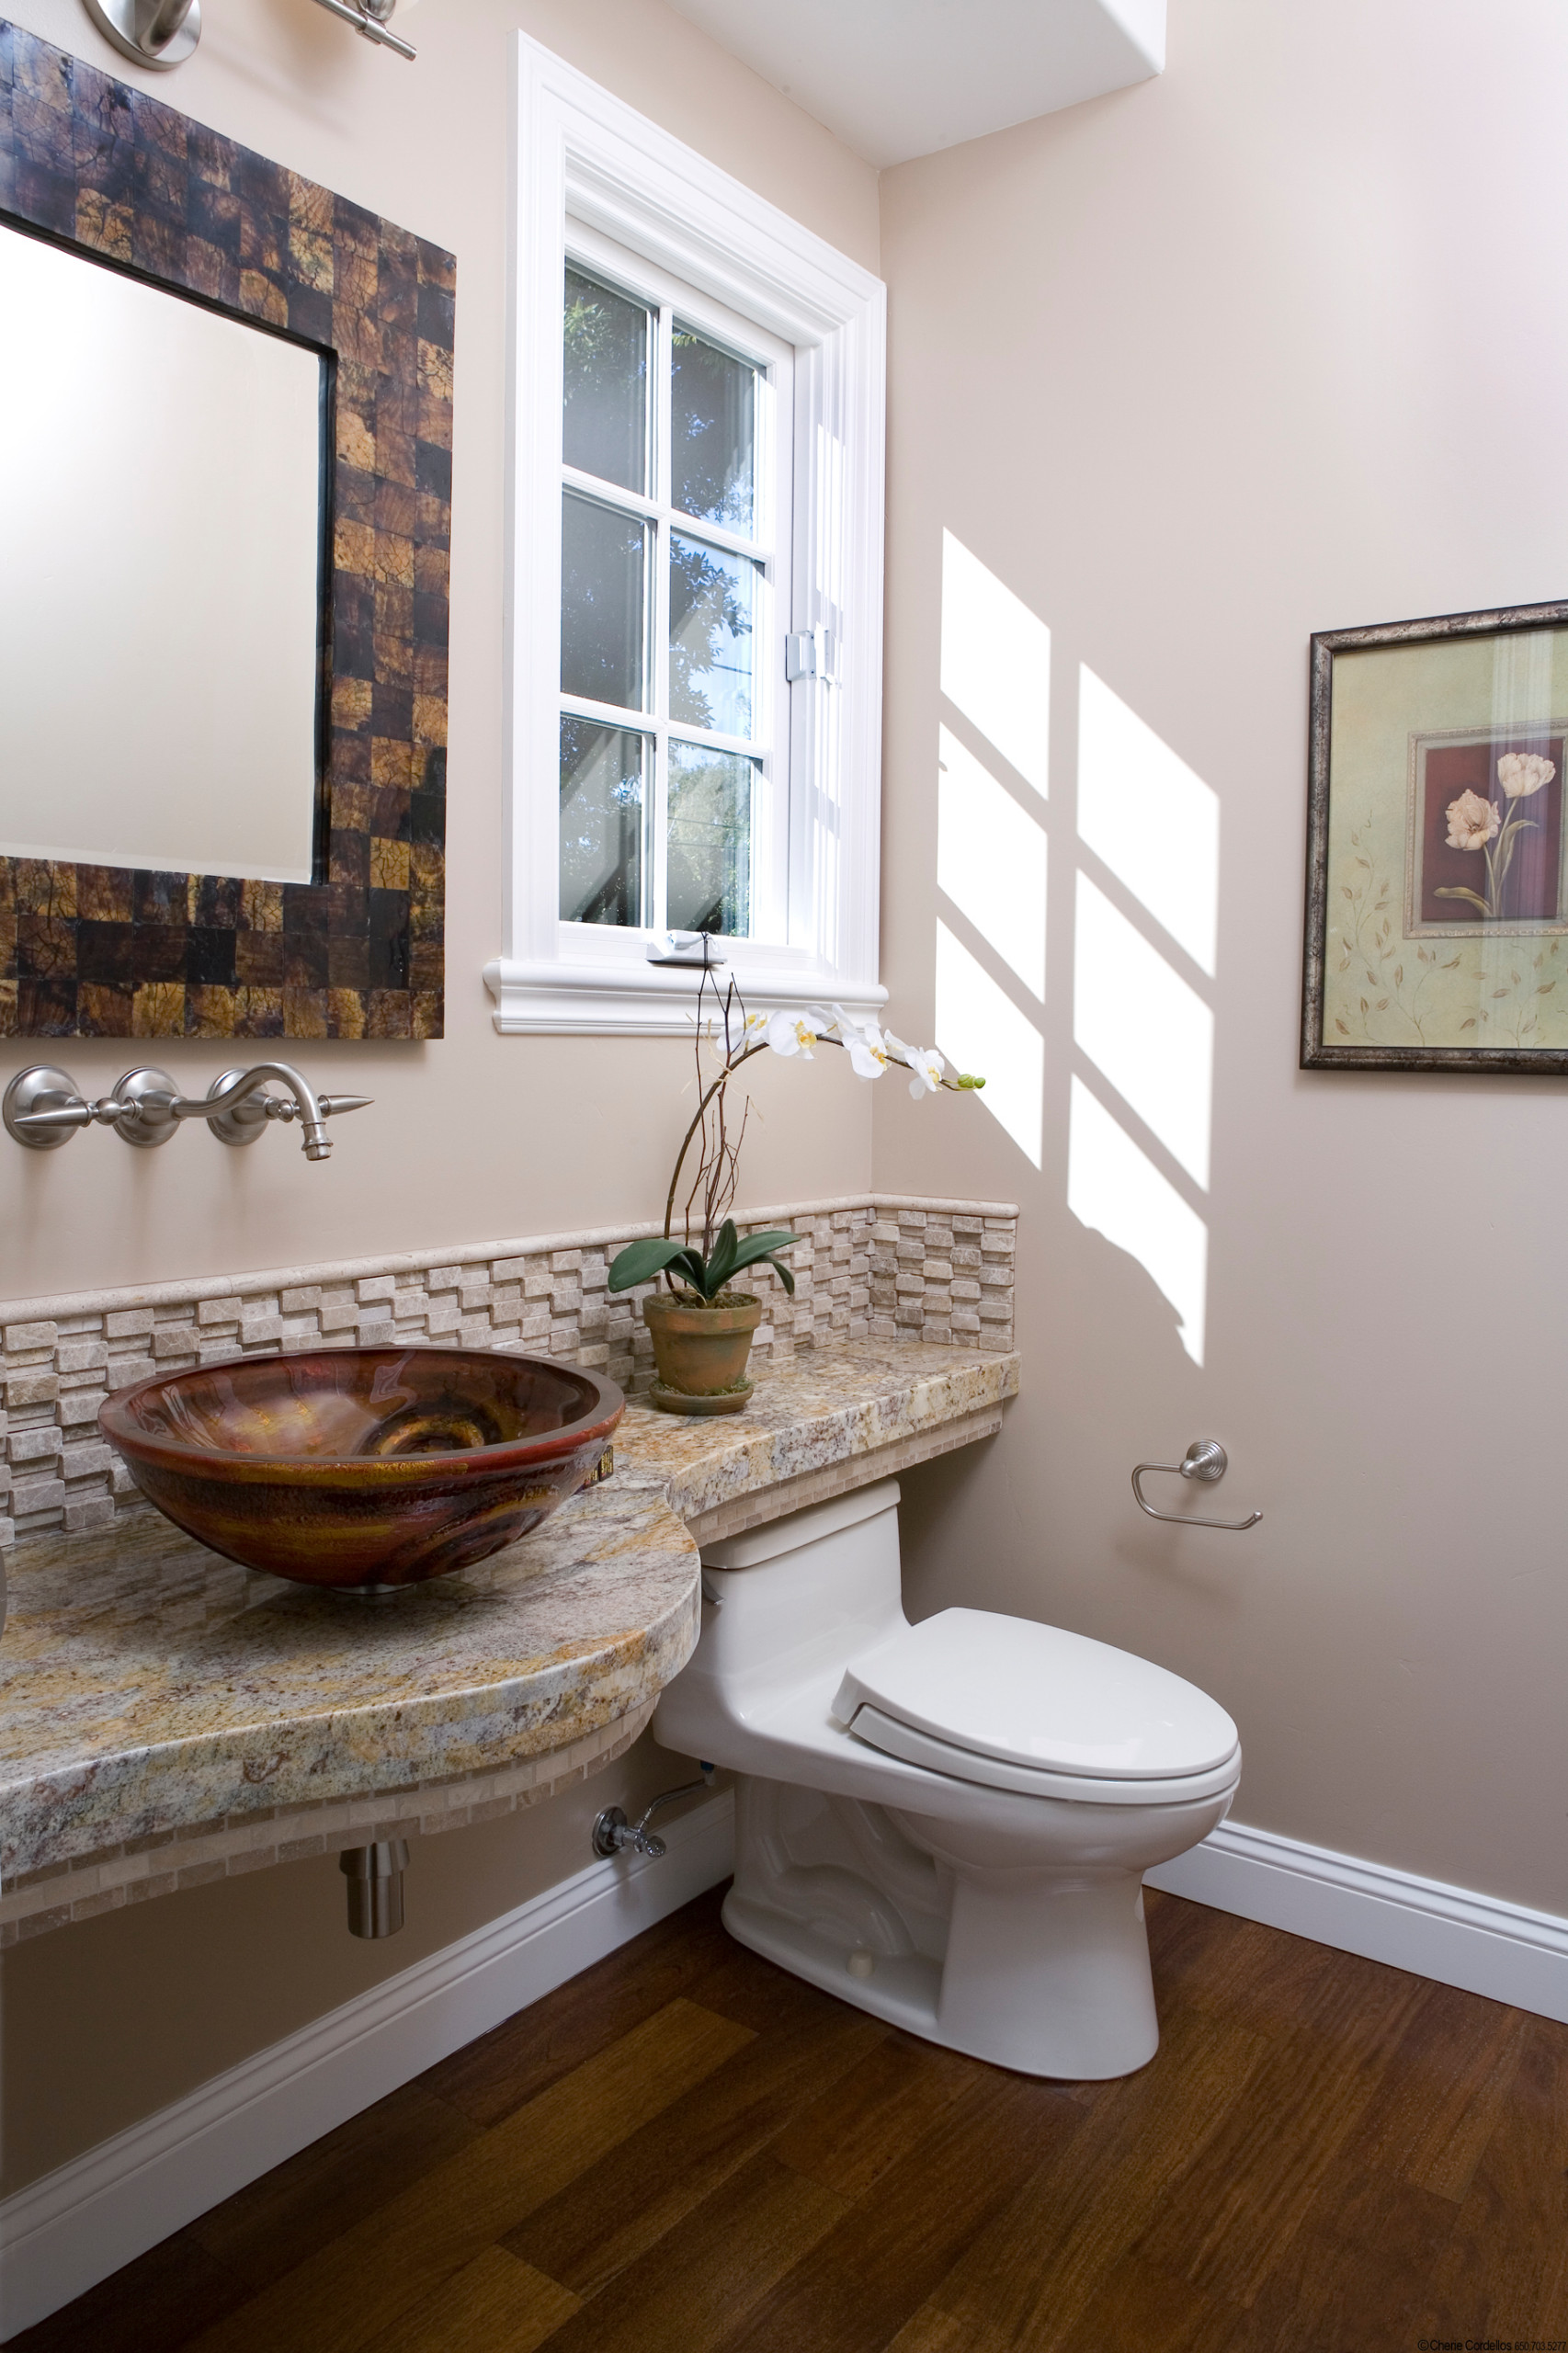 Counter Over Toilet Houzz, Bathroom Vanity With Shelf Over Toilet